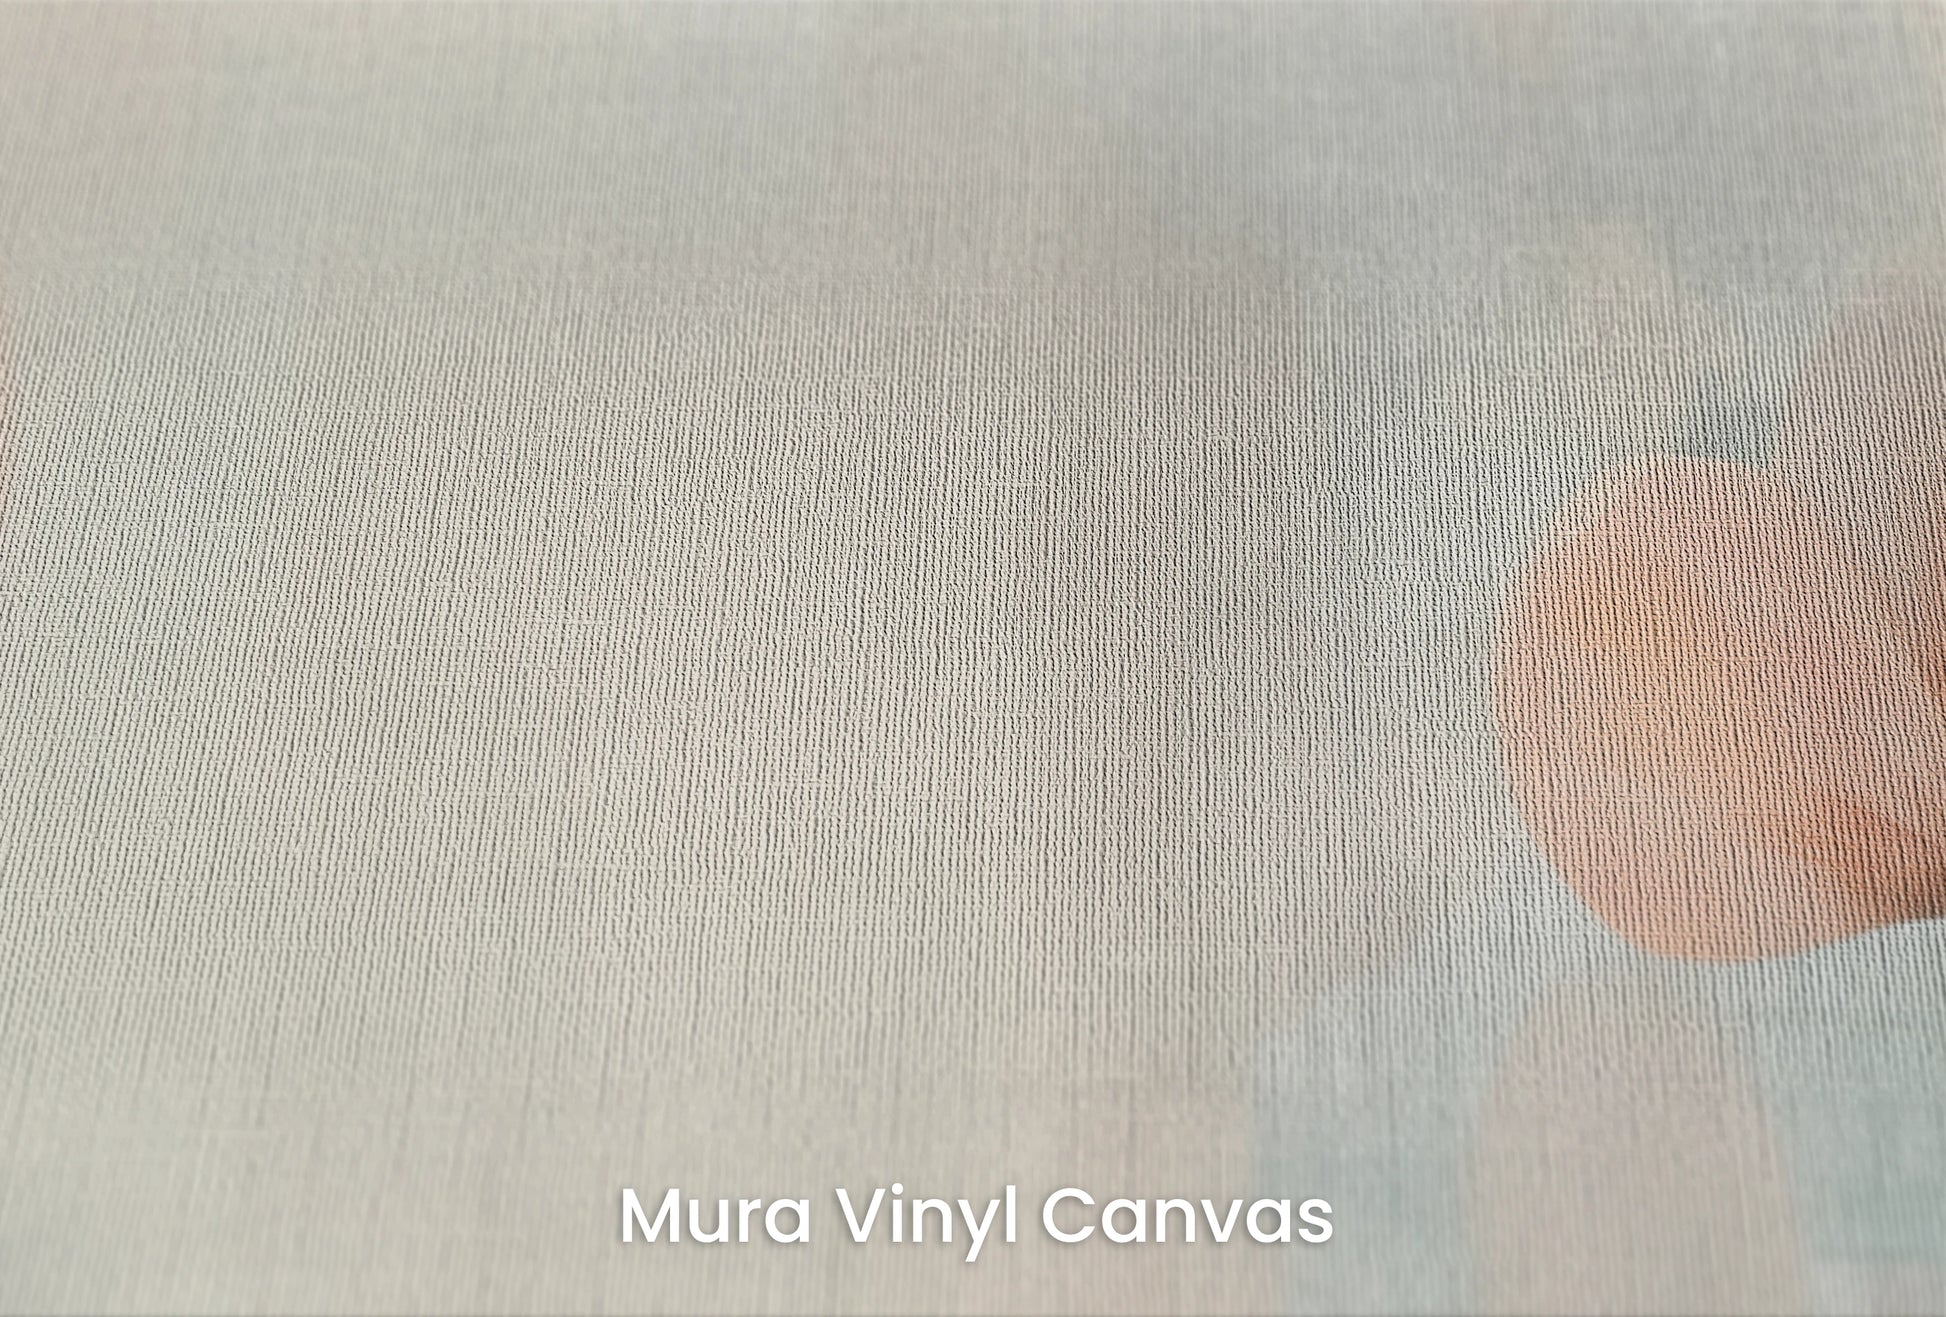 Zbliżenie na artystyczną fototapetę o nazwie Abstract Blossom Art na podłożu Mura Vinyl Canvas - faktura naturalnego płótna.